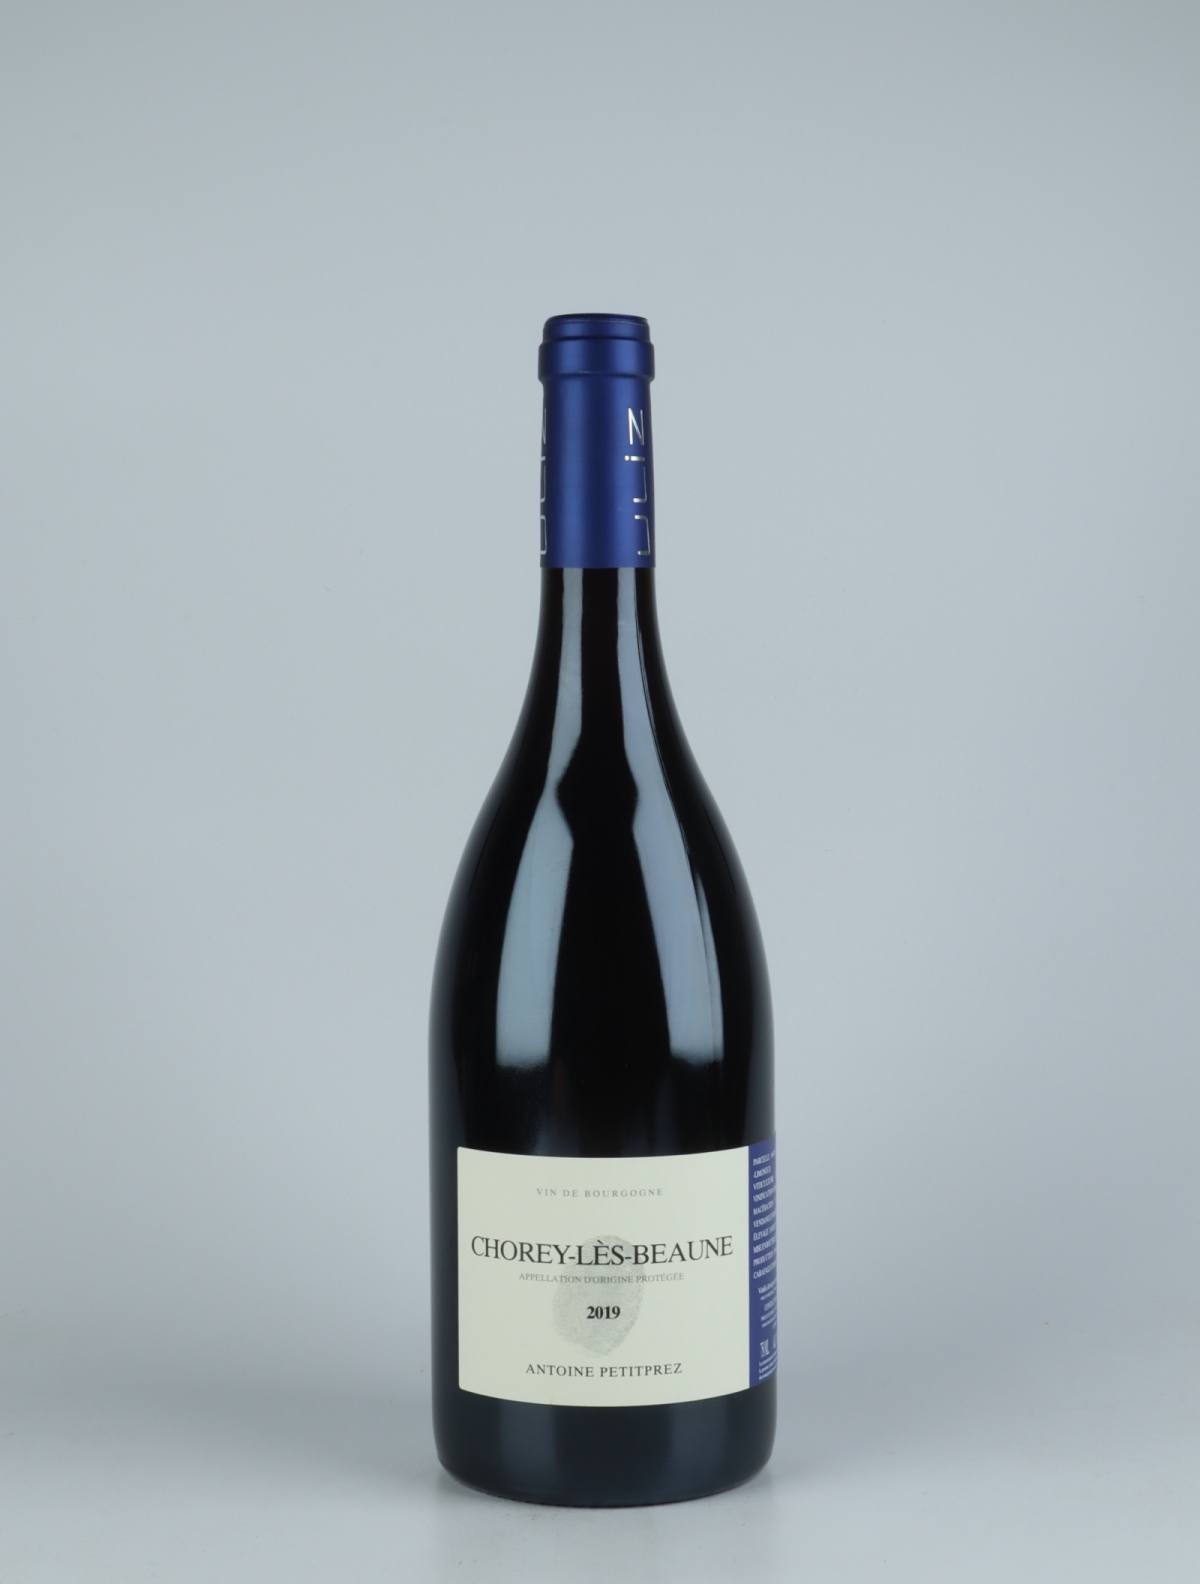 A bottle 2019 Chorey les Beaune Red wine from Antoine Petitprez, Burgundy in France